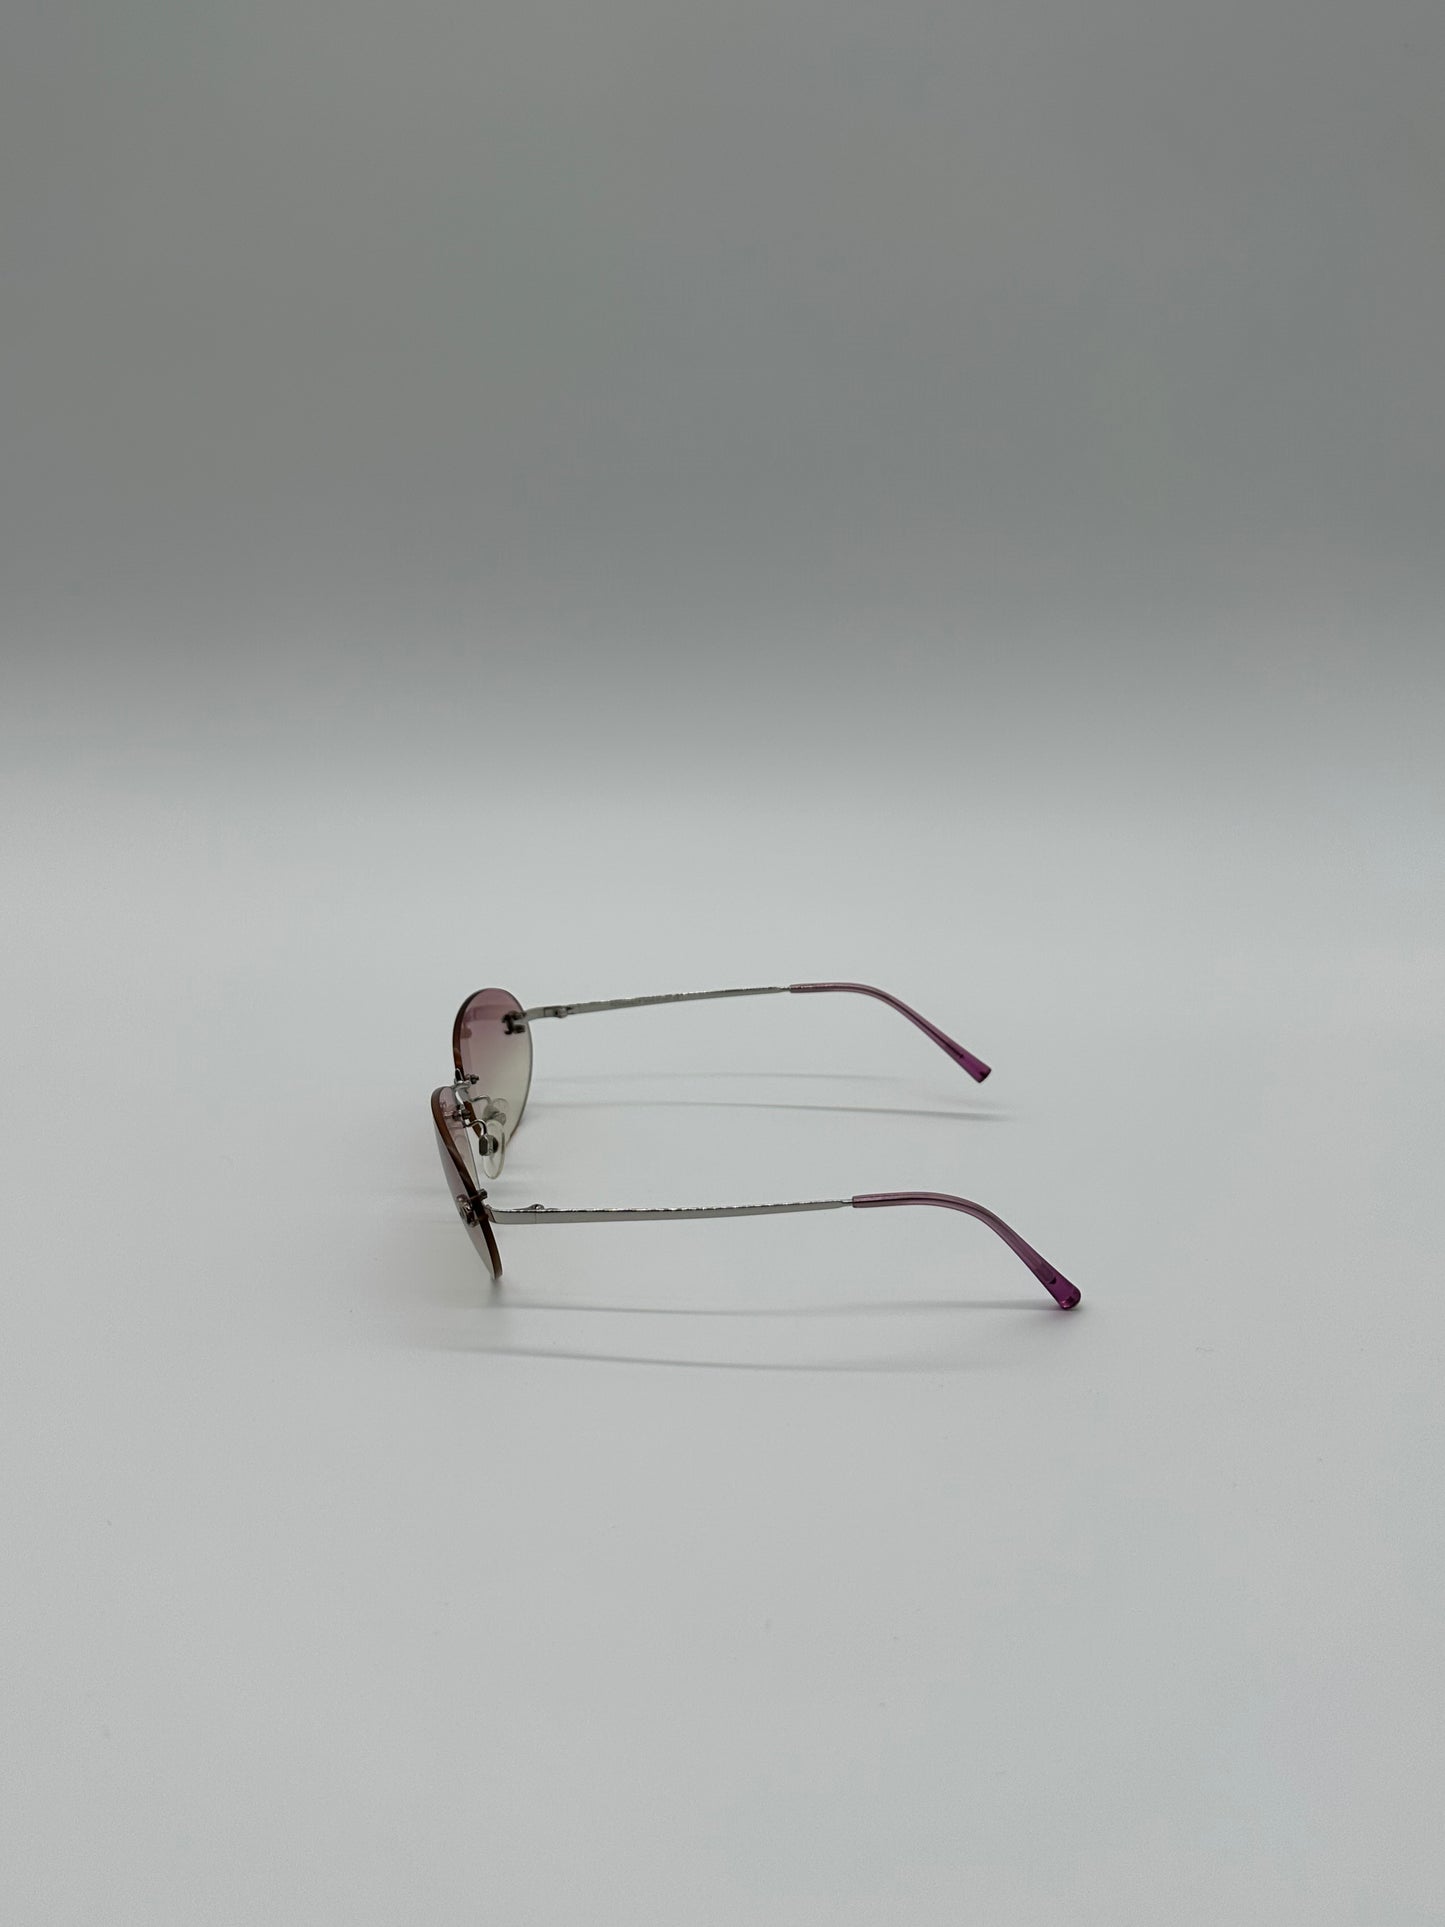 Vintage Pink Oval Chanel Sunglasses